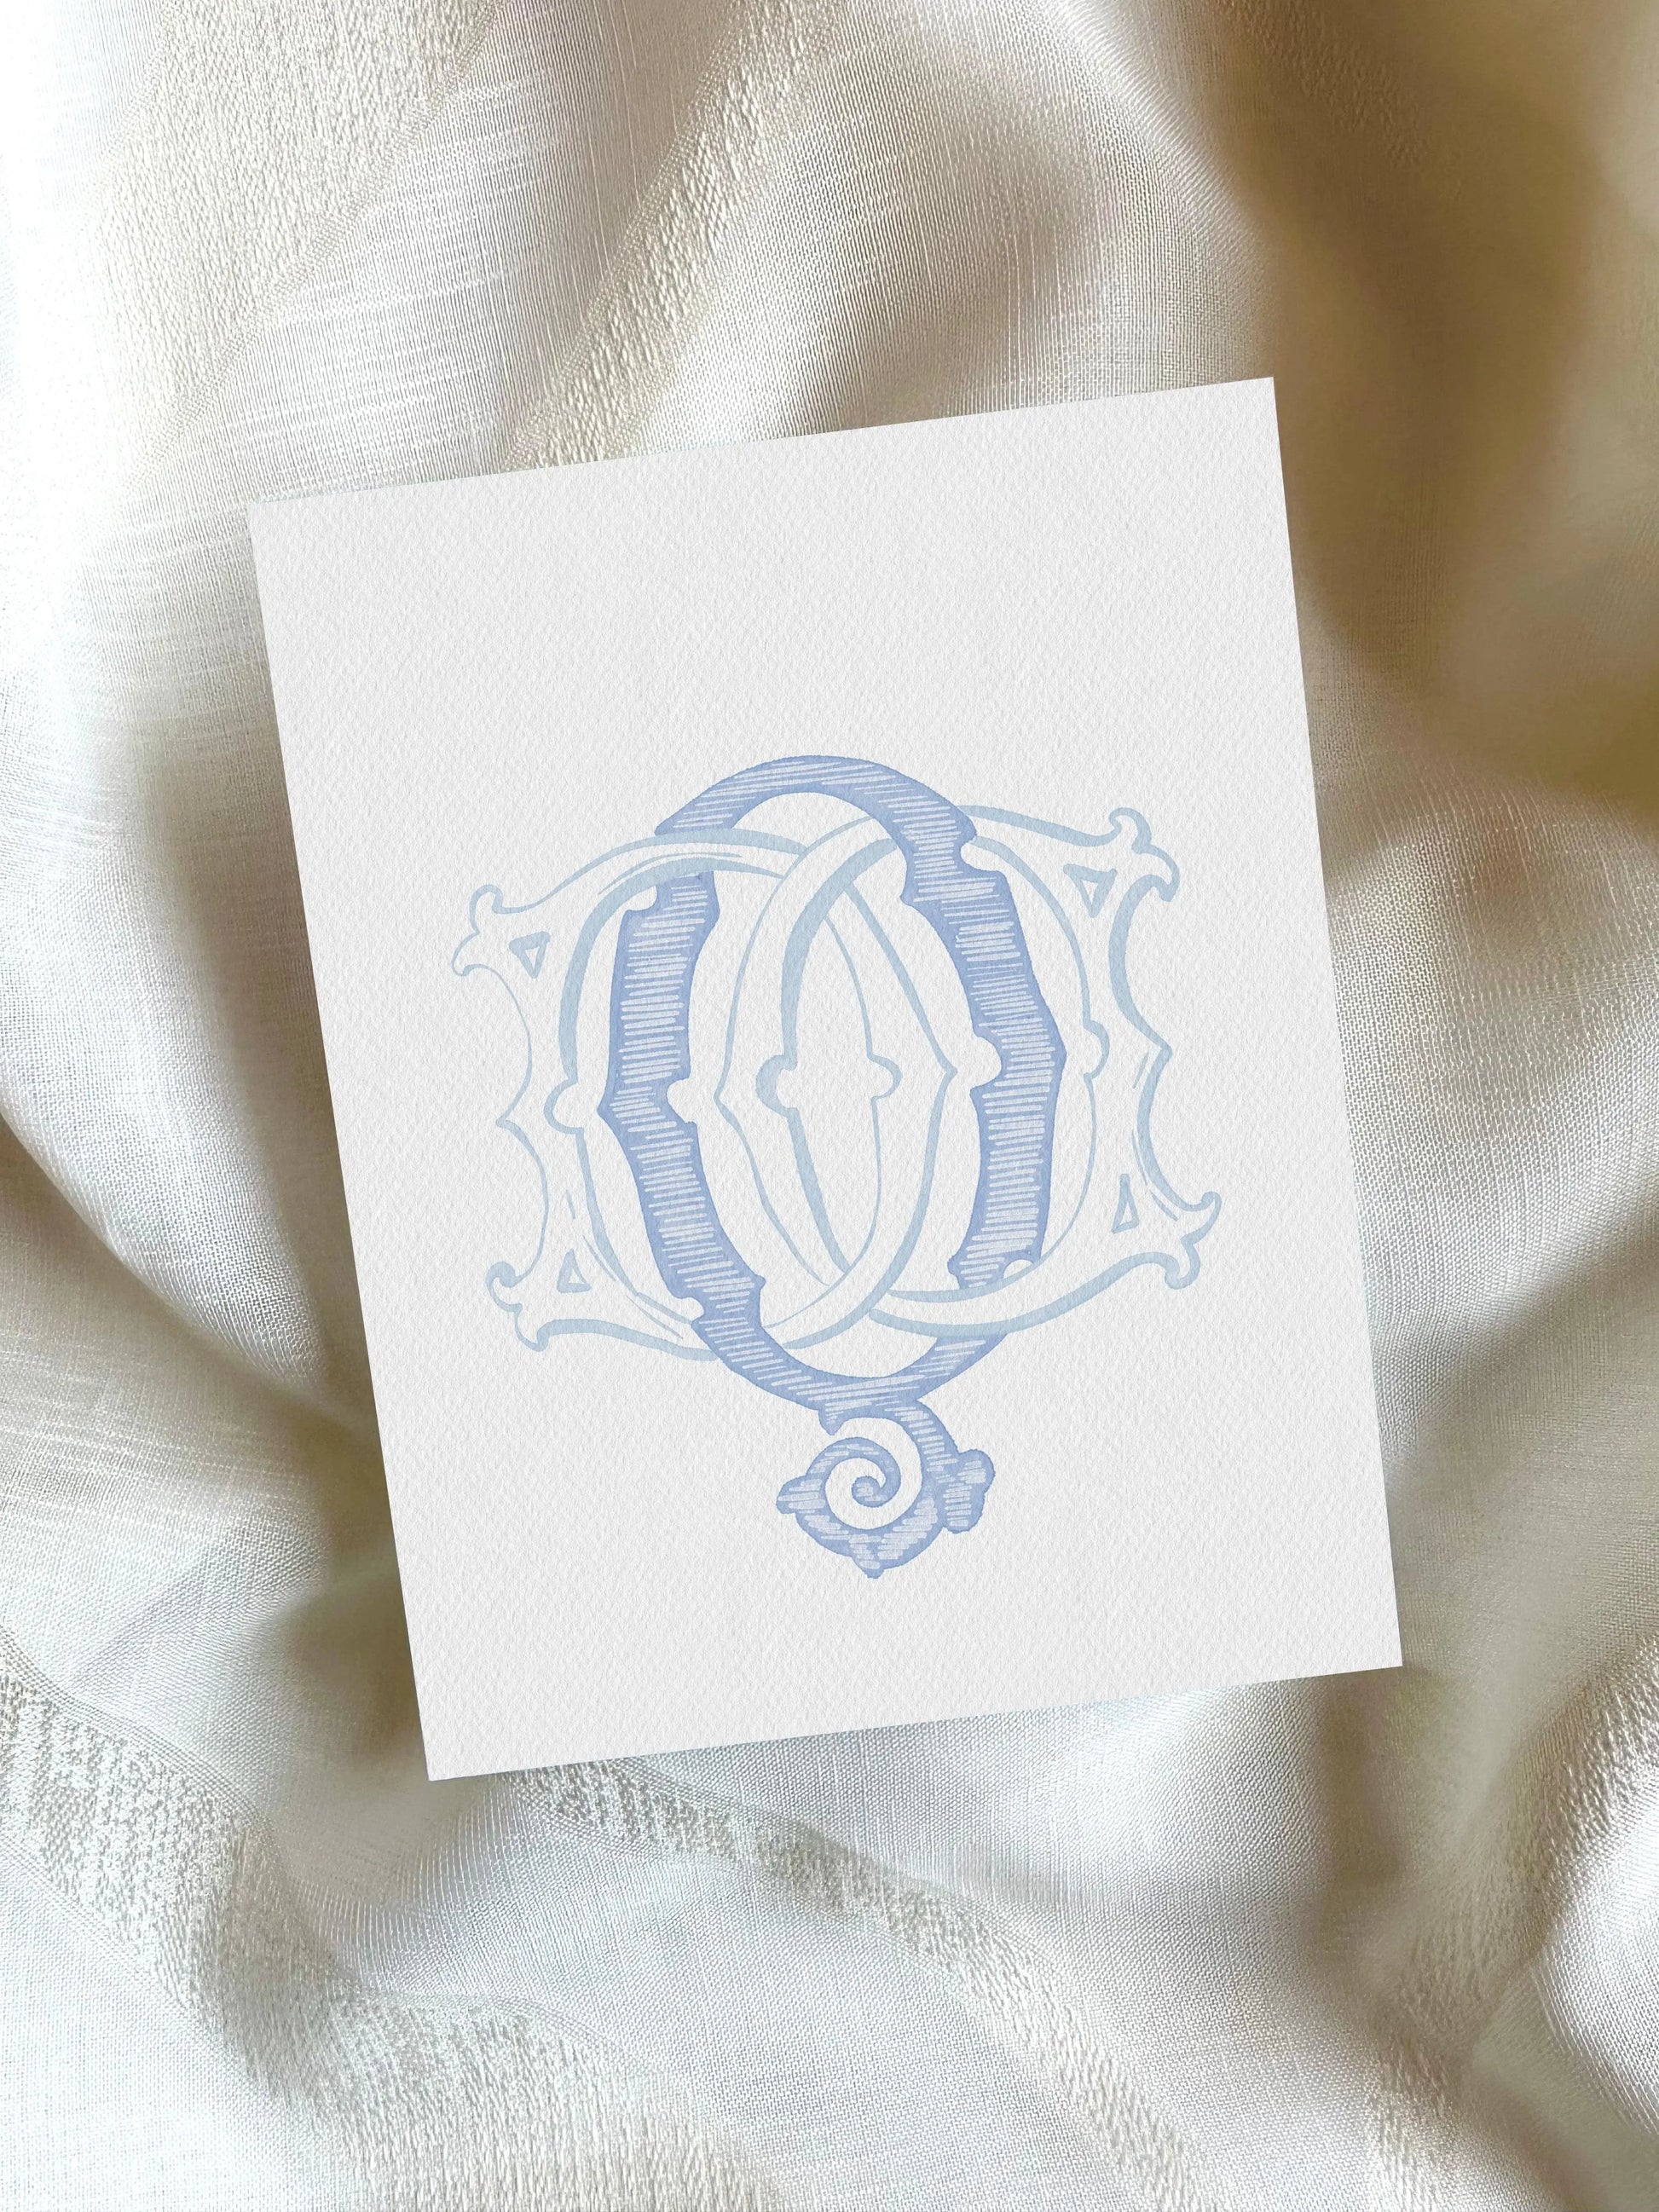 2 Letter Monogram with Letters DQ | Digital Download - Wedding Monogram SVG, Personal Logo, Wedding Logo for Wedding Invitations The Wedding Crest Lab